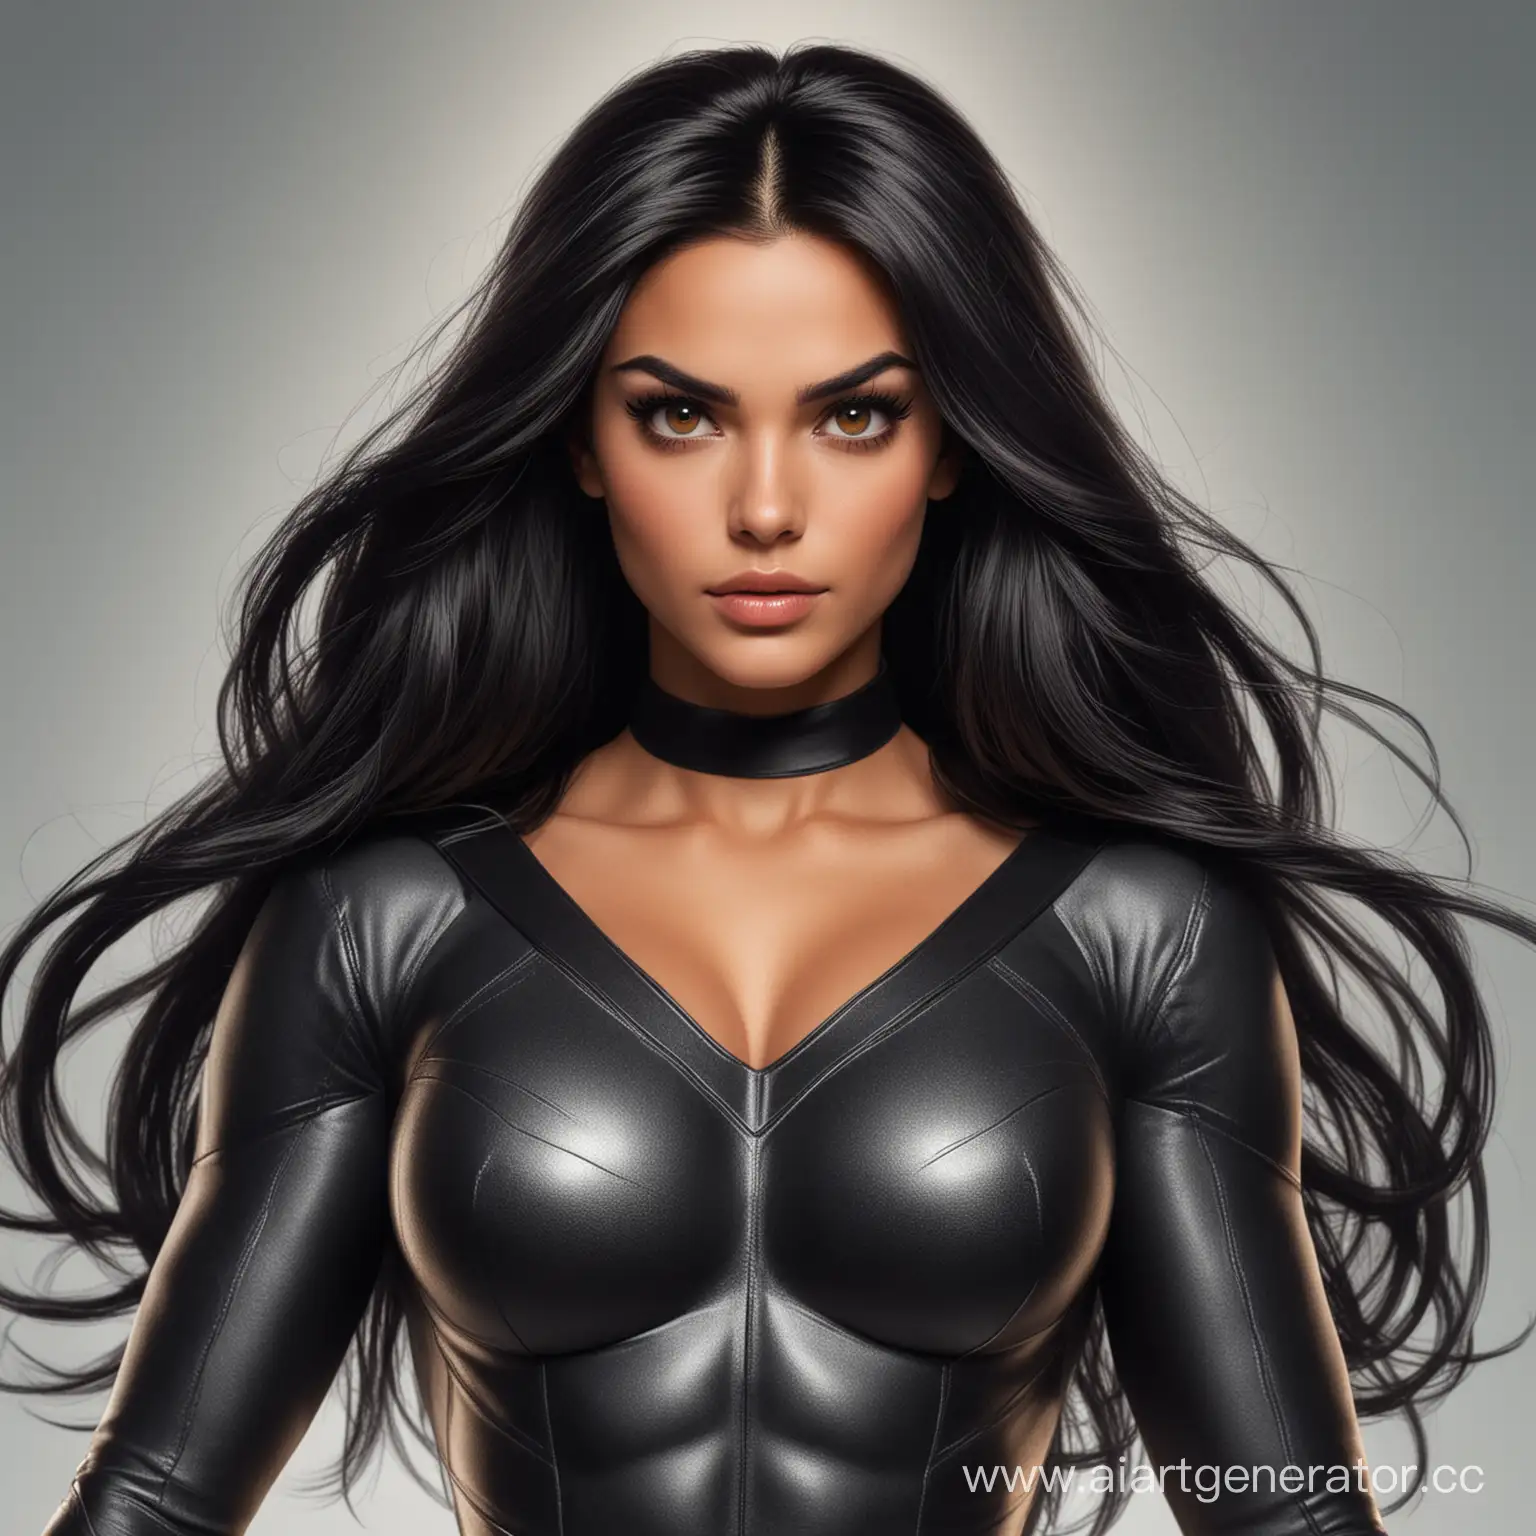 Tall-Superhero-Girl-with-Long-Black-Hair-and-Brown-Eyes-in-Heroic-Pose